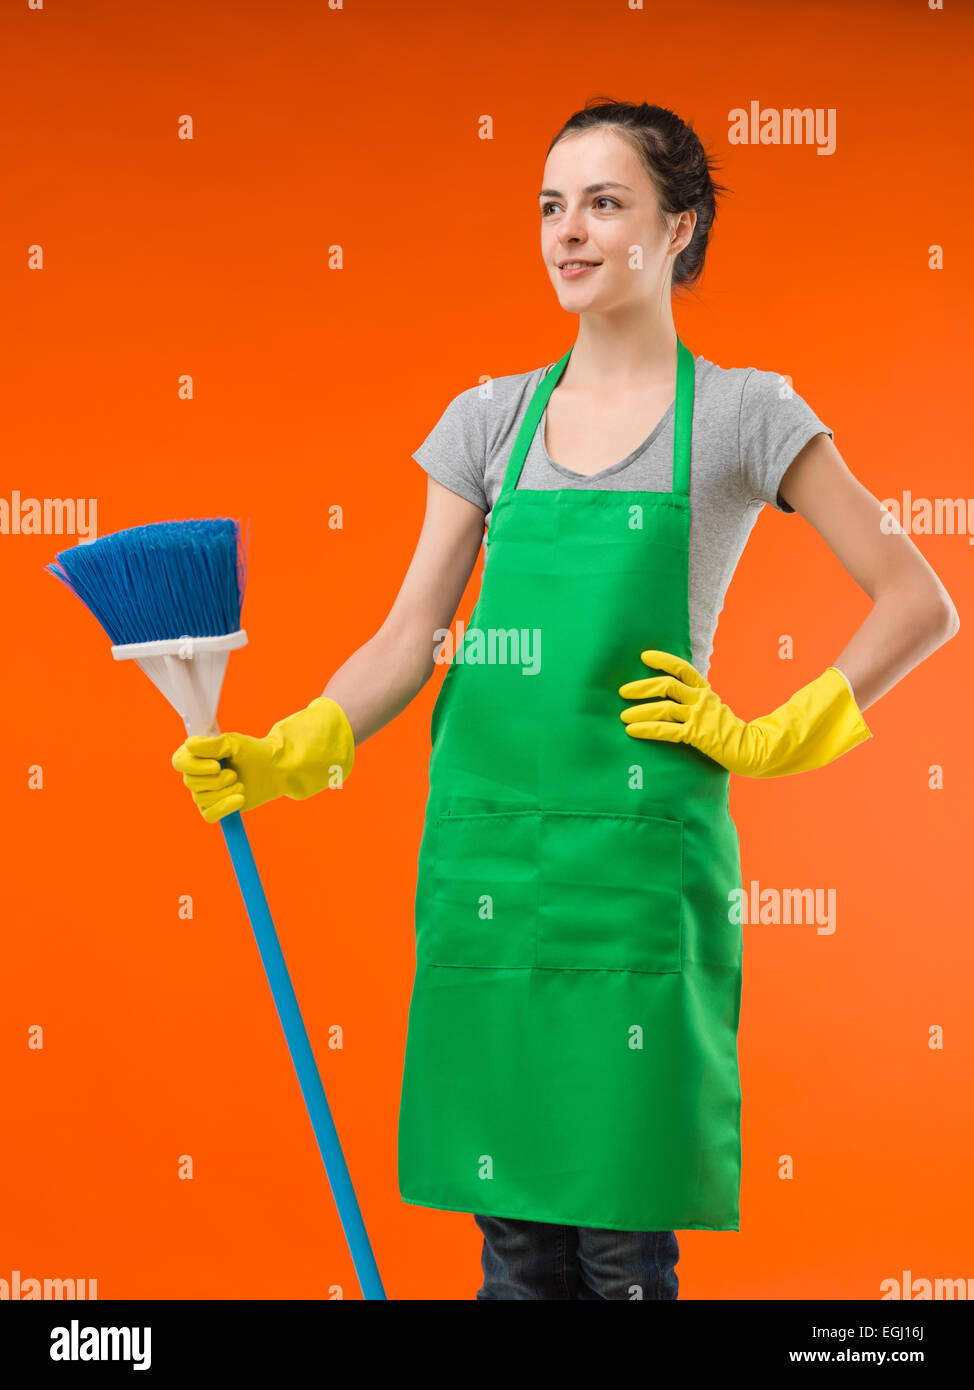 https://c8.alamy.com/comp/EGJ16J/happy-cleaning-lady-standing-and-holding-broom-on-orange-background-EGJ16J.jpg